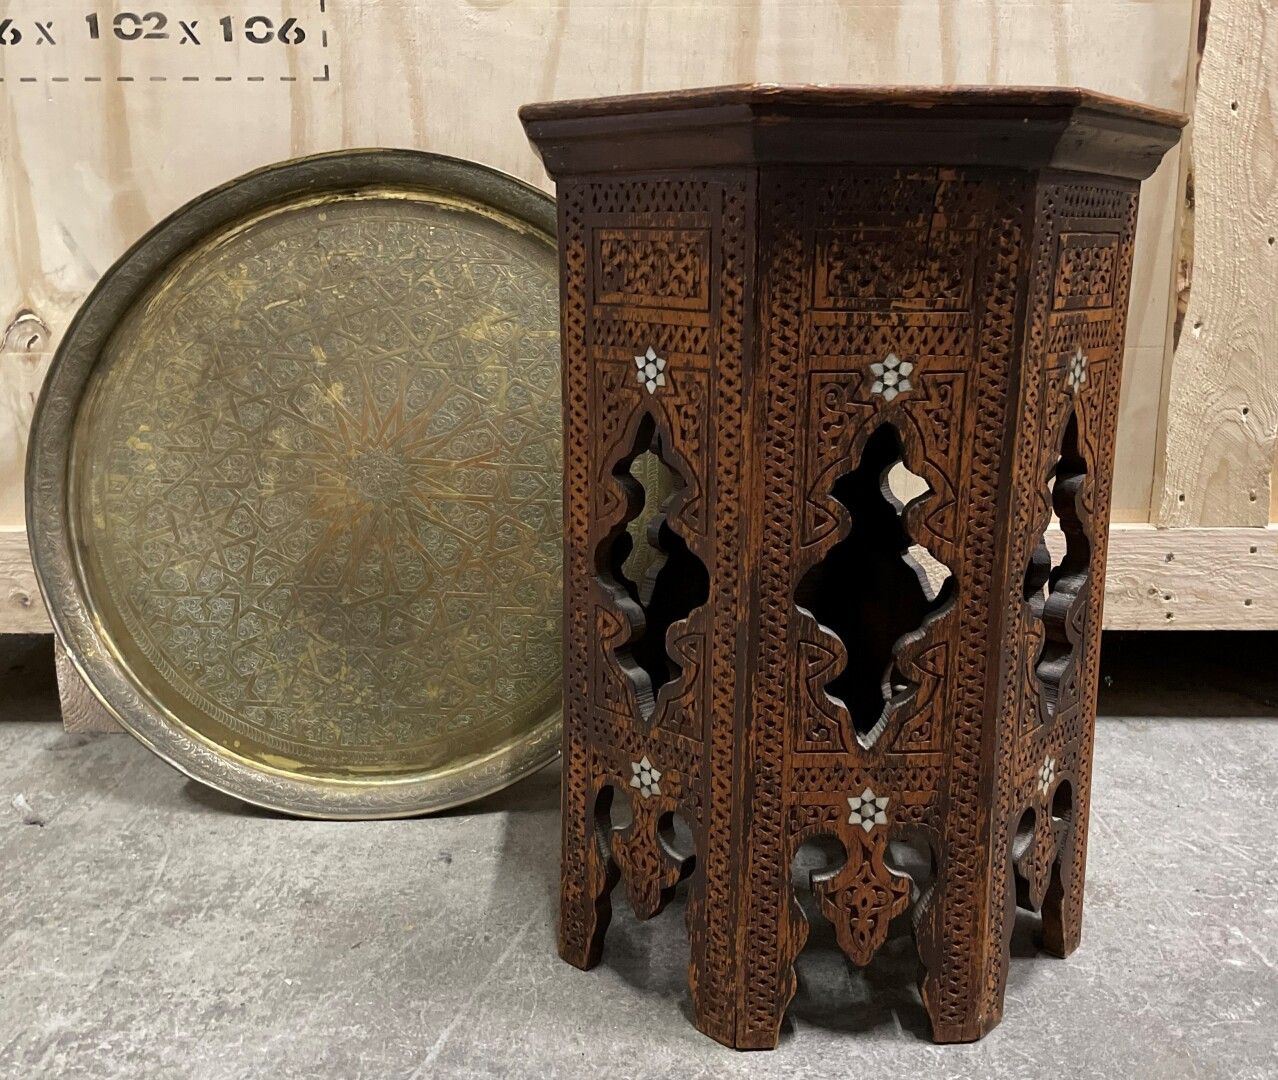 Null 小八角桌，有几何形的镂空装饰，并镶嵌着珍珠母。

北非的工作

50 x 36,50 cm

磨损的

一个接头。

印花和雕刻装饰的铜托盘

直径：&hellip;